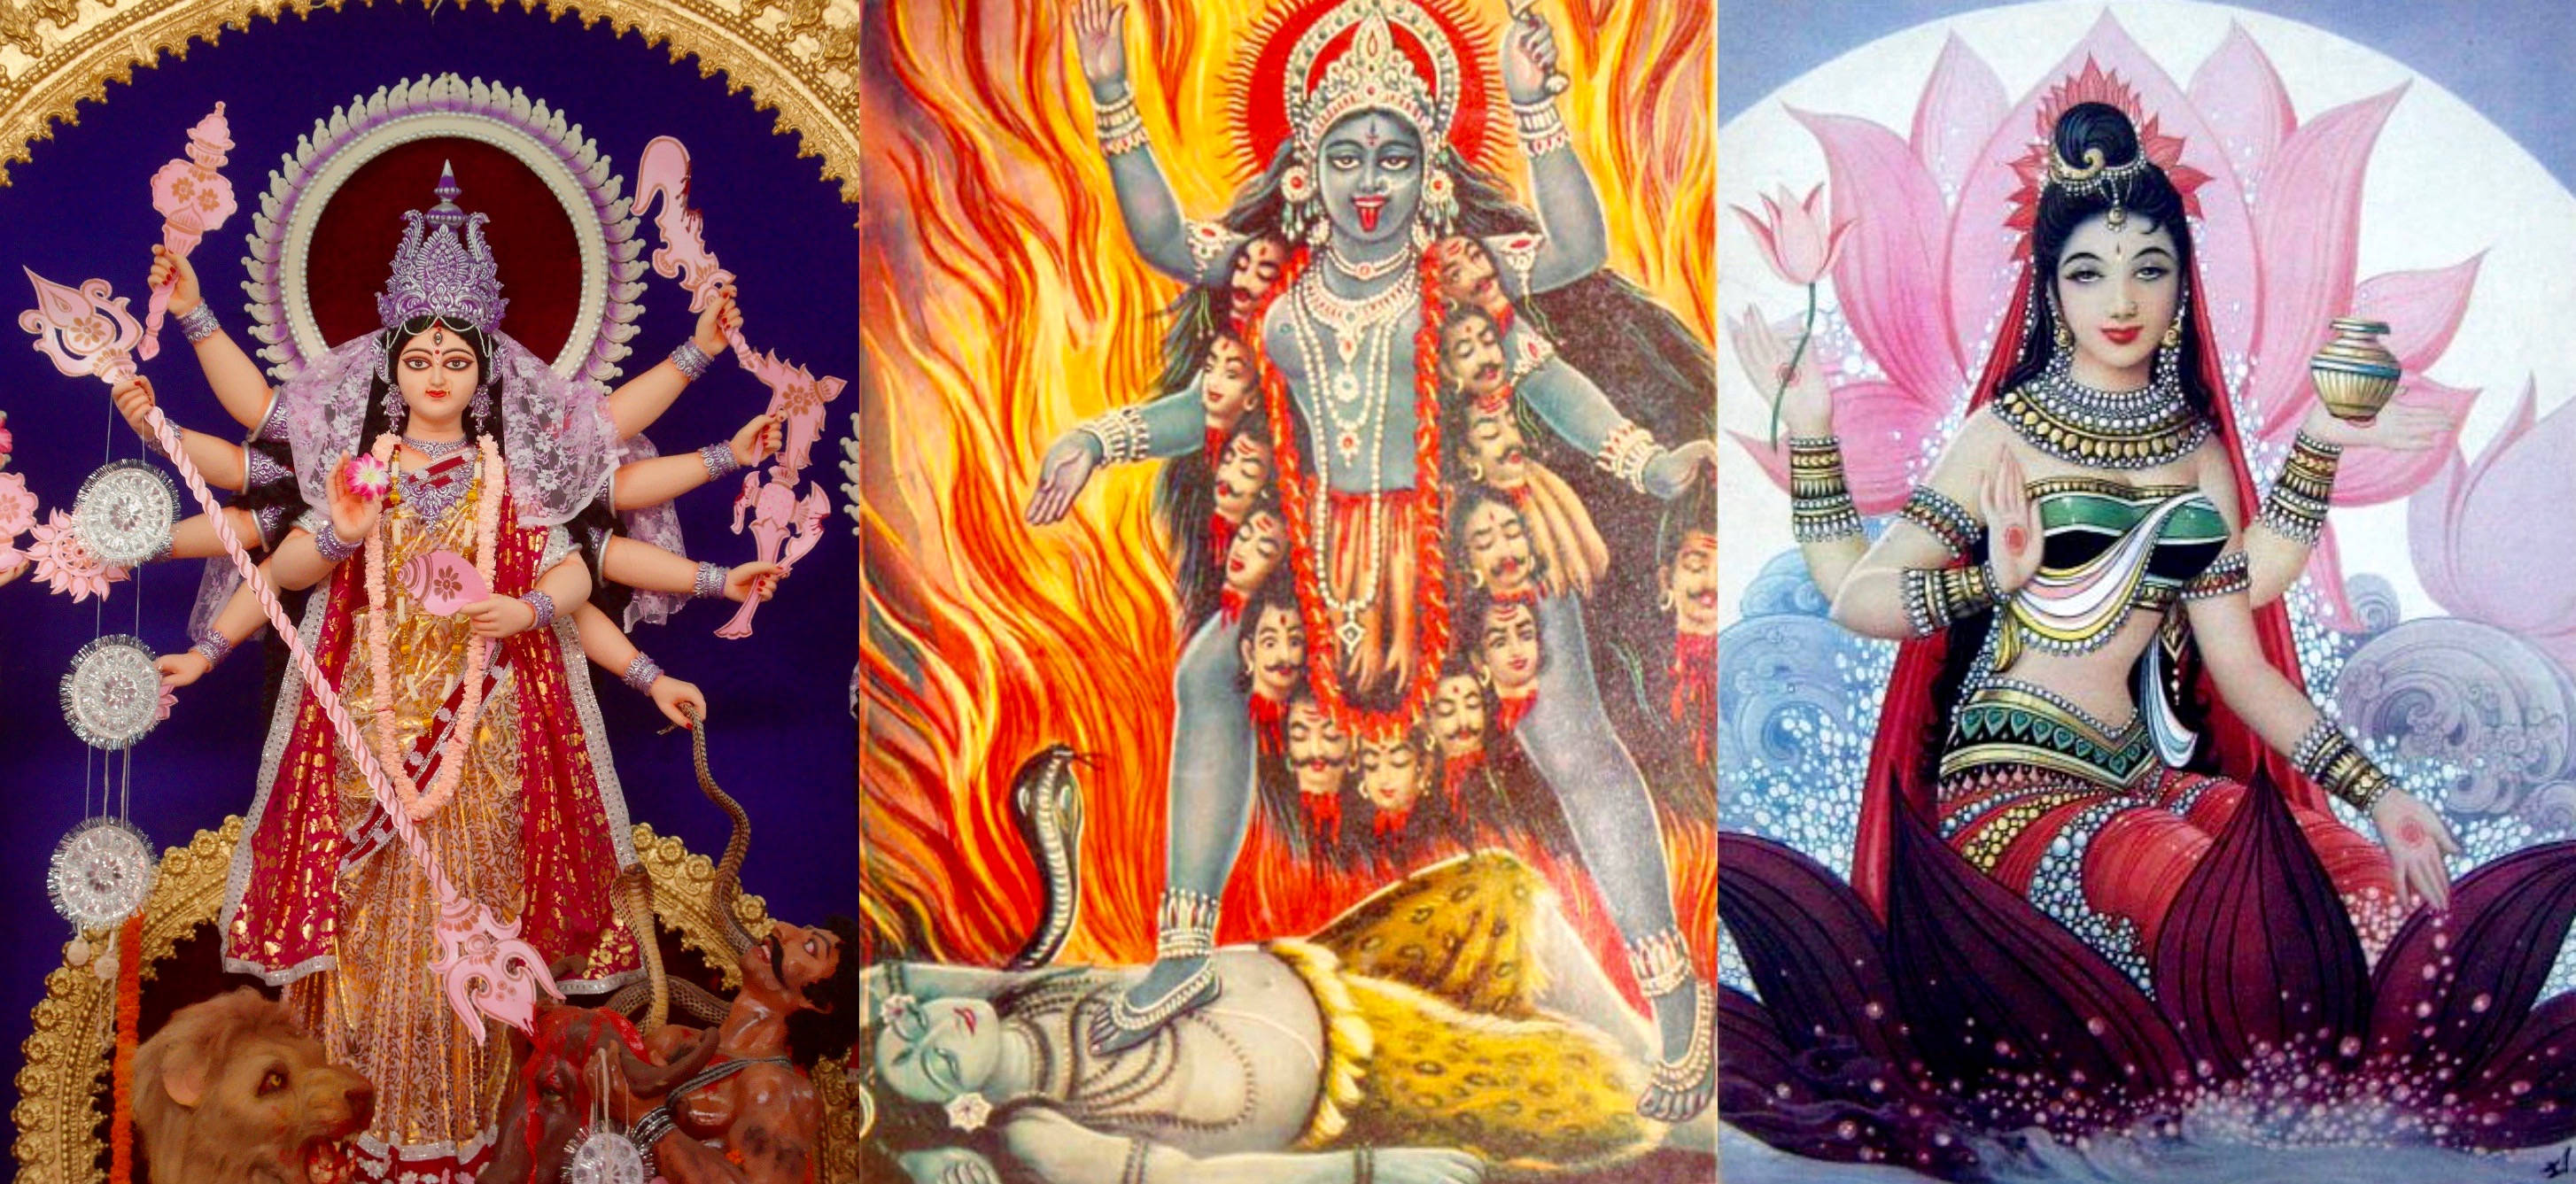 All Hindu Gods As Females Wallpaper